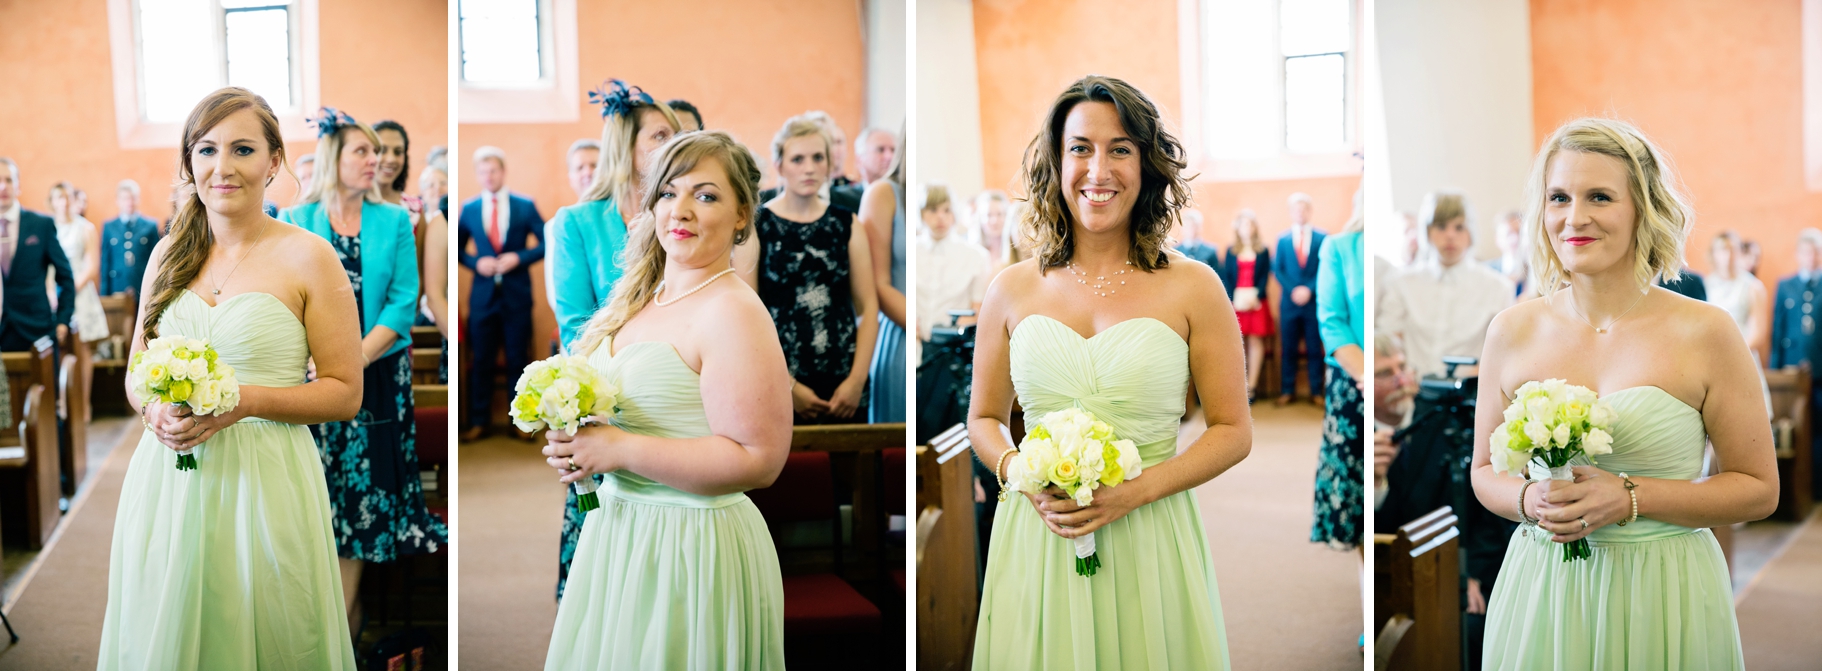 13-Church-Wedding-Ceremony-Photographer-England-Bristol-Wedding-Photography-by-Betty-Elaine